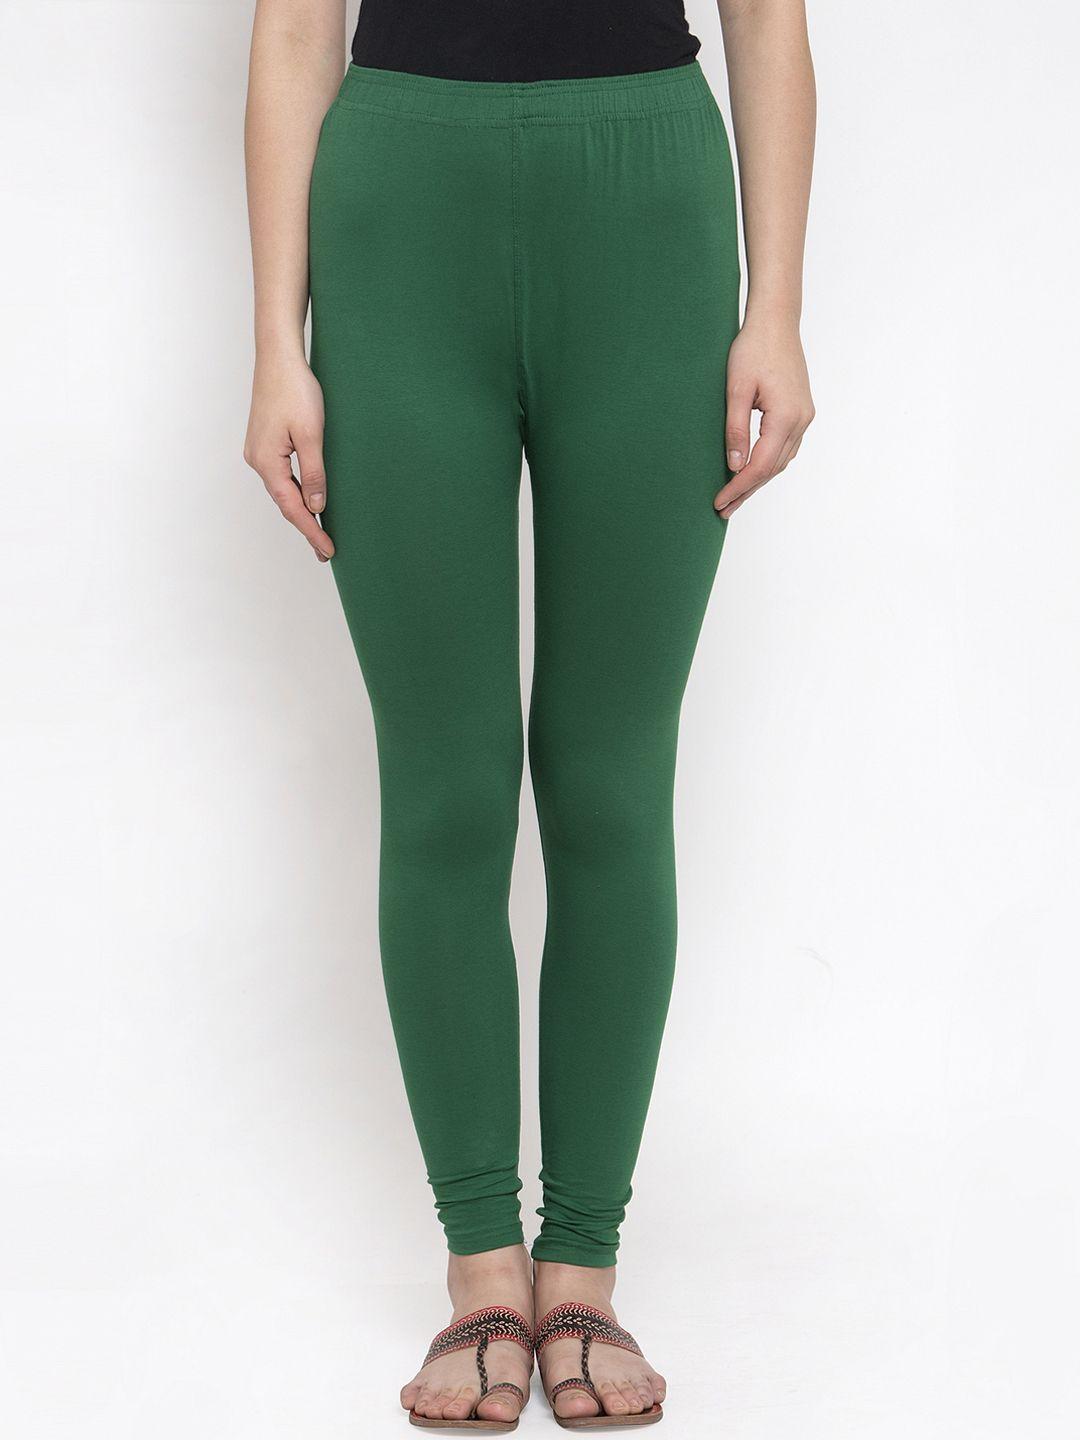 tag 7 women green solid churidar-length leggings